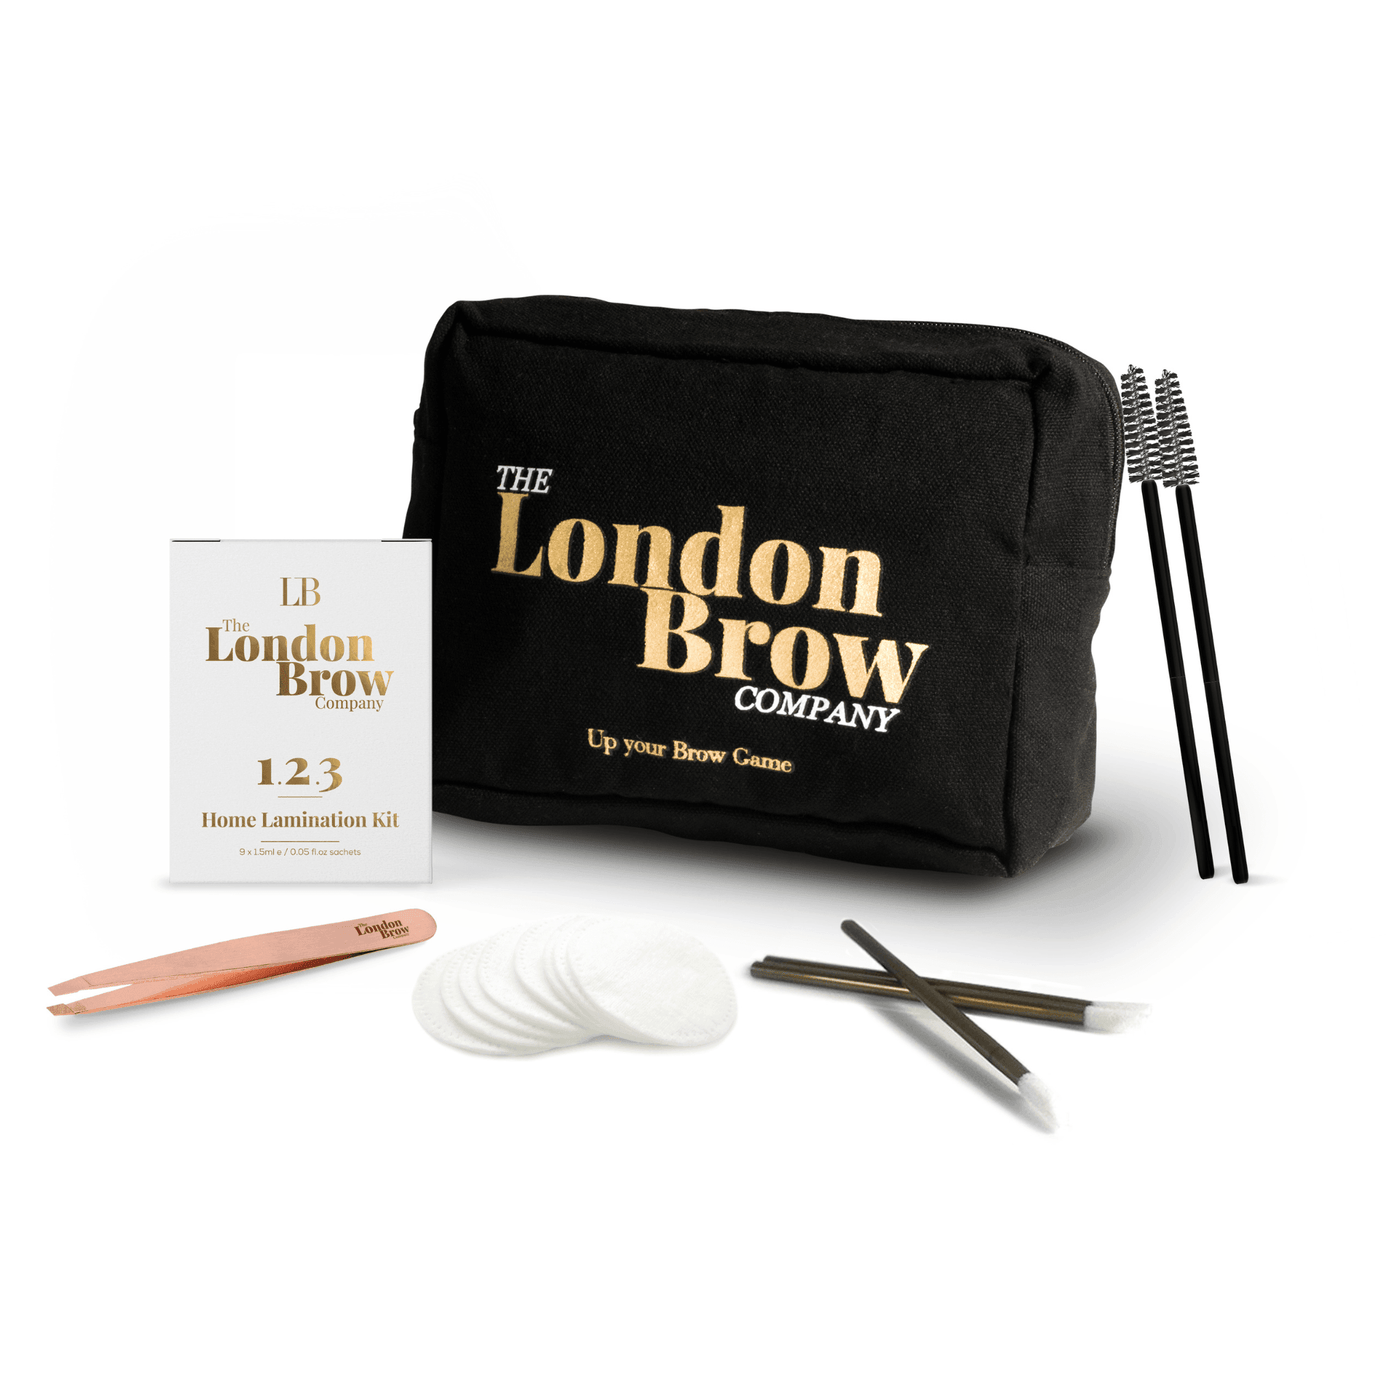 London Brow Home Lamination Set and Travel Bag - The London Brow Company